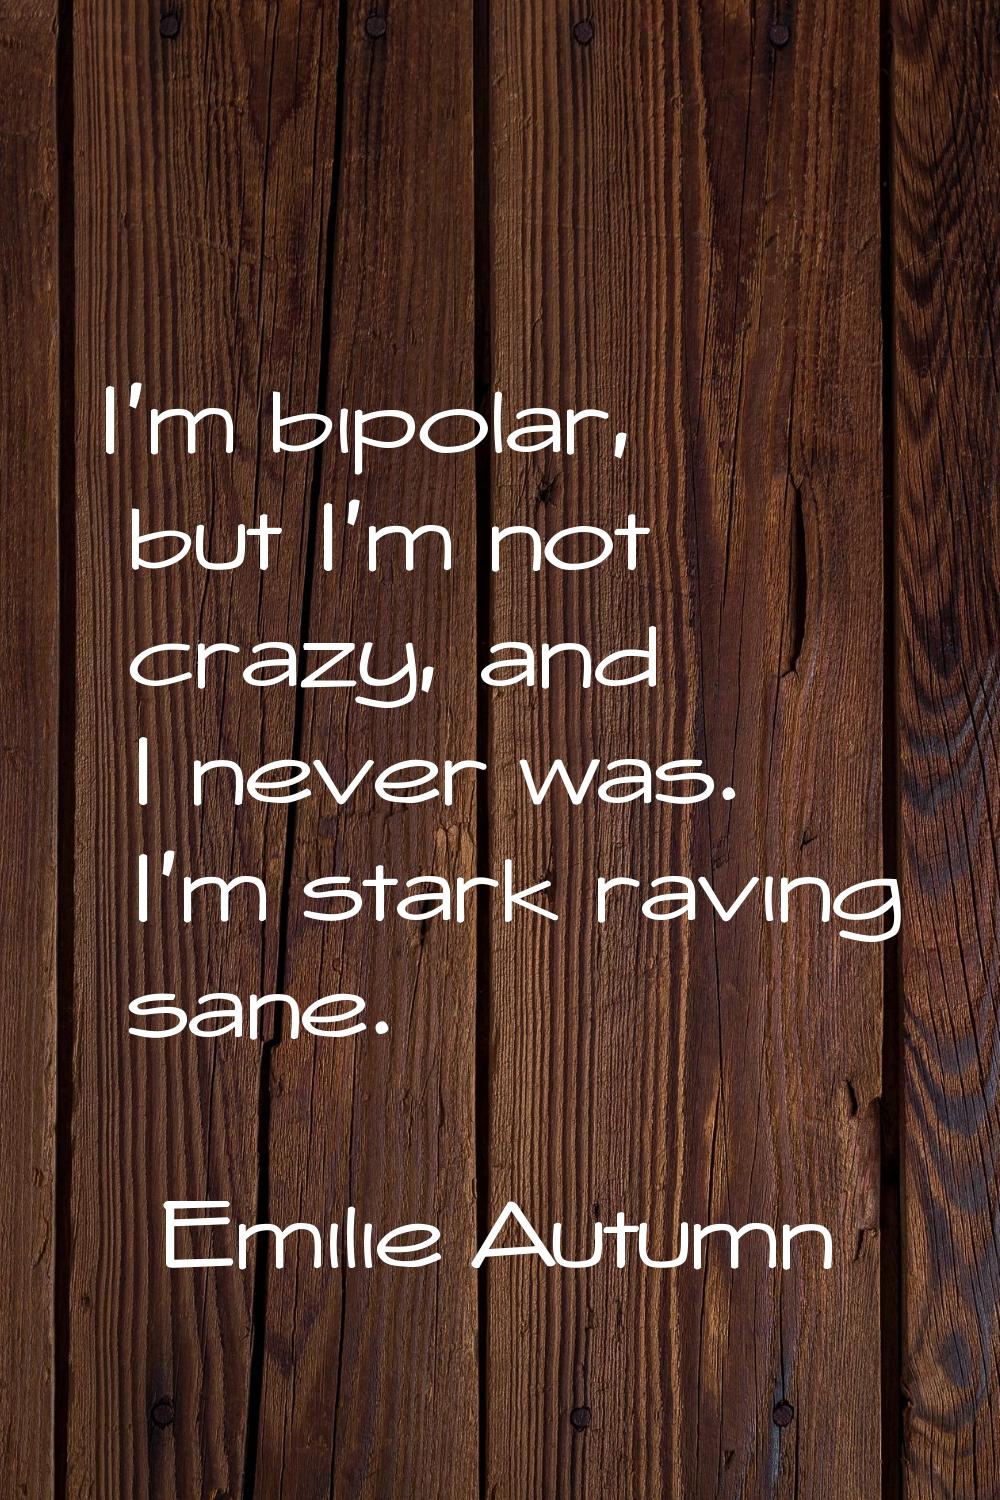 I'm bipolar, but I'm not crazy, and I never was. I'm stark raving sane.